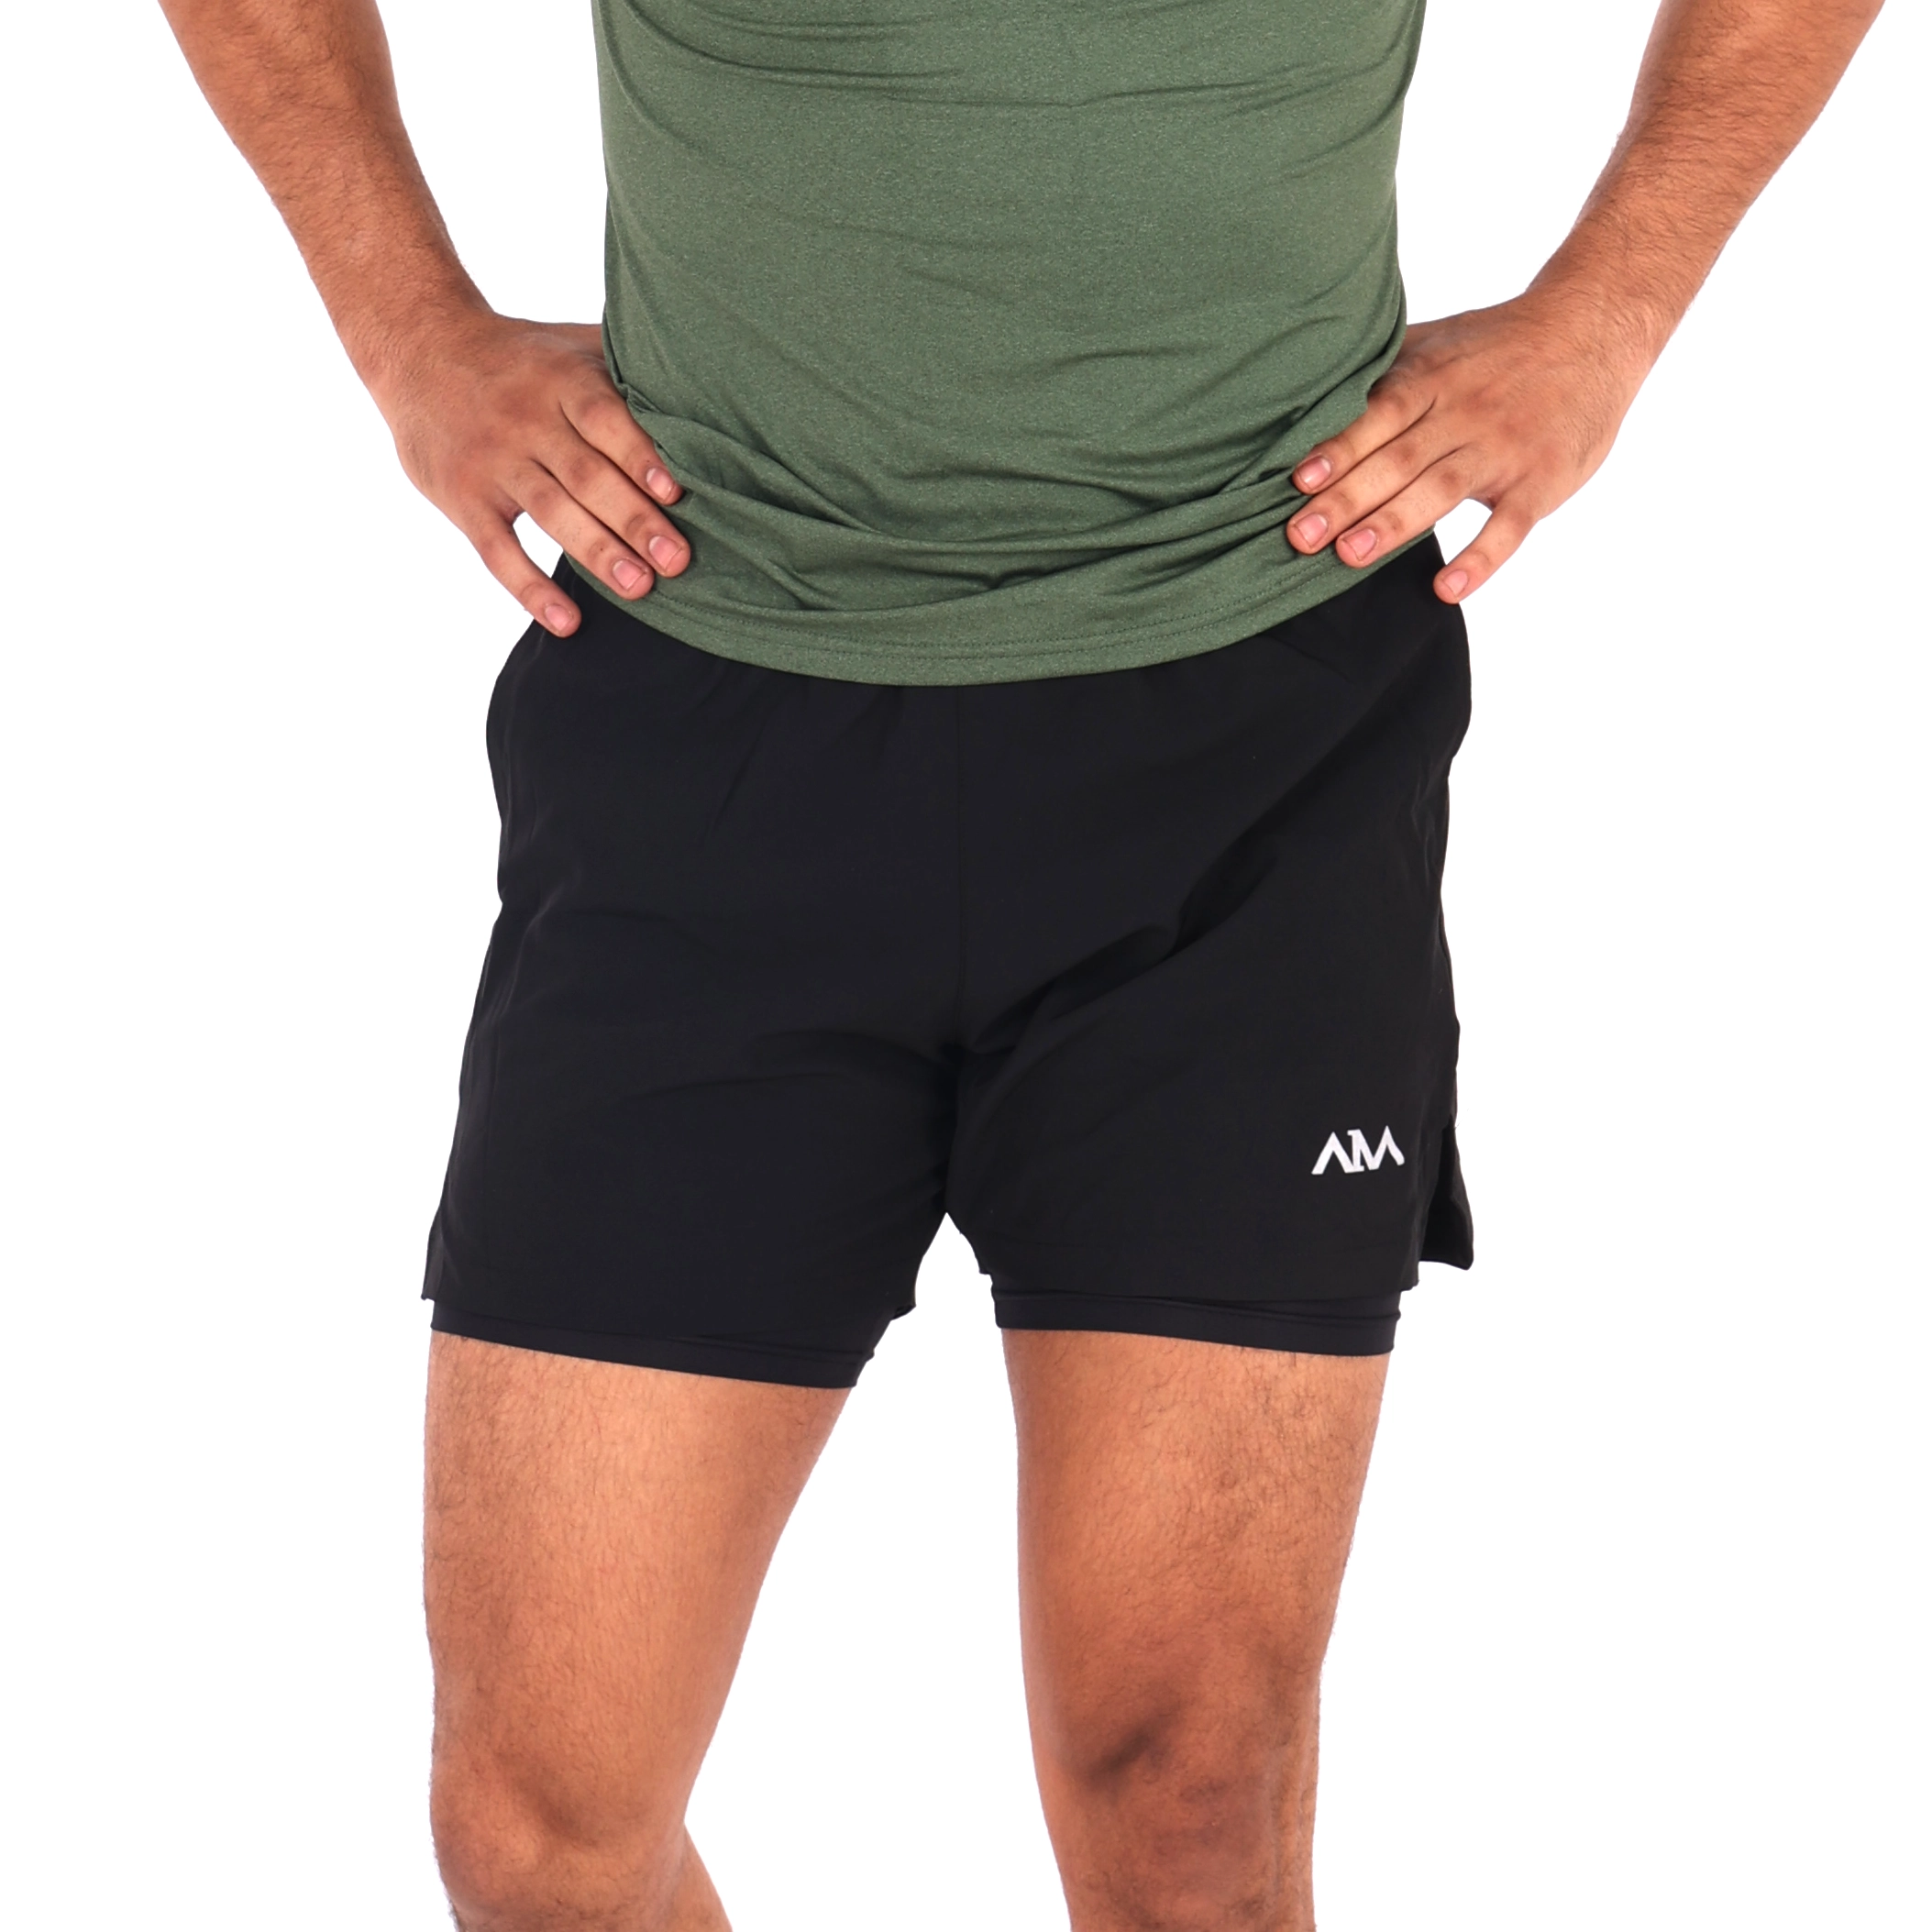 FLASH - 2 pack legging shorts - Black - Sz. M - Zizzifashion